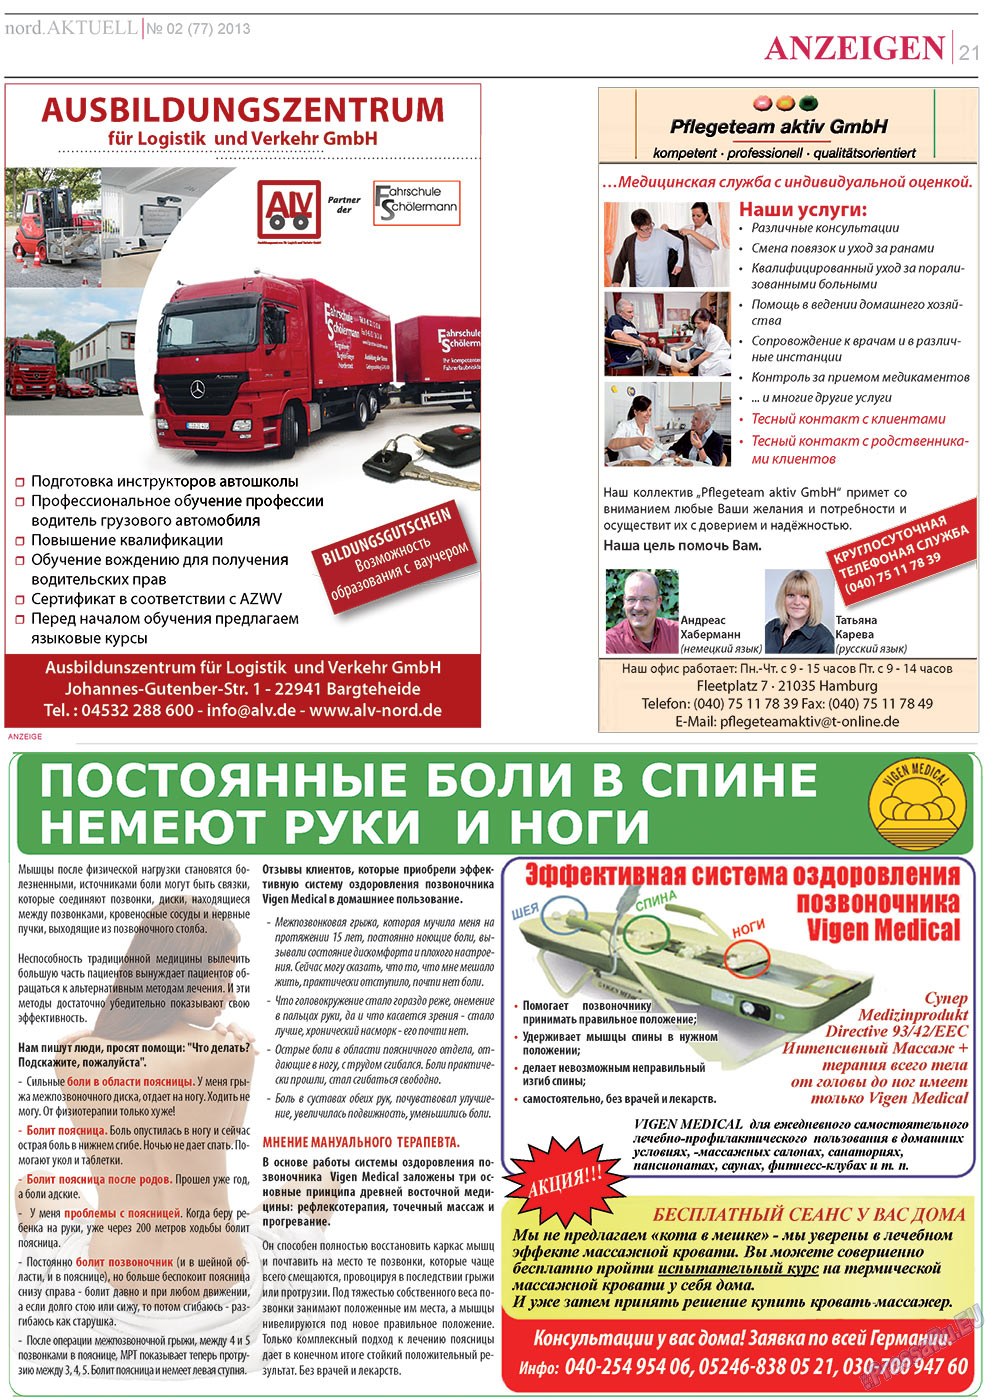 nord.Aktuell, газета. 2013 №2 стр.21